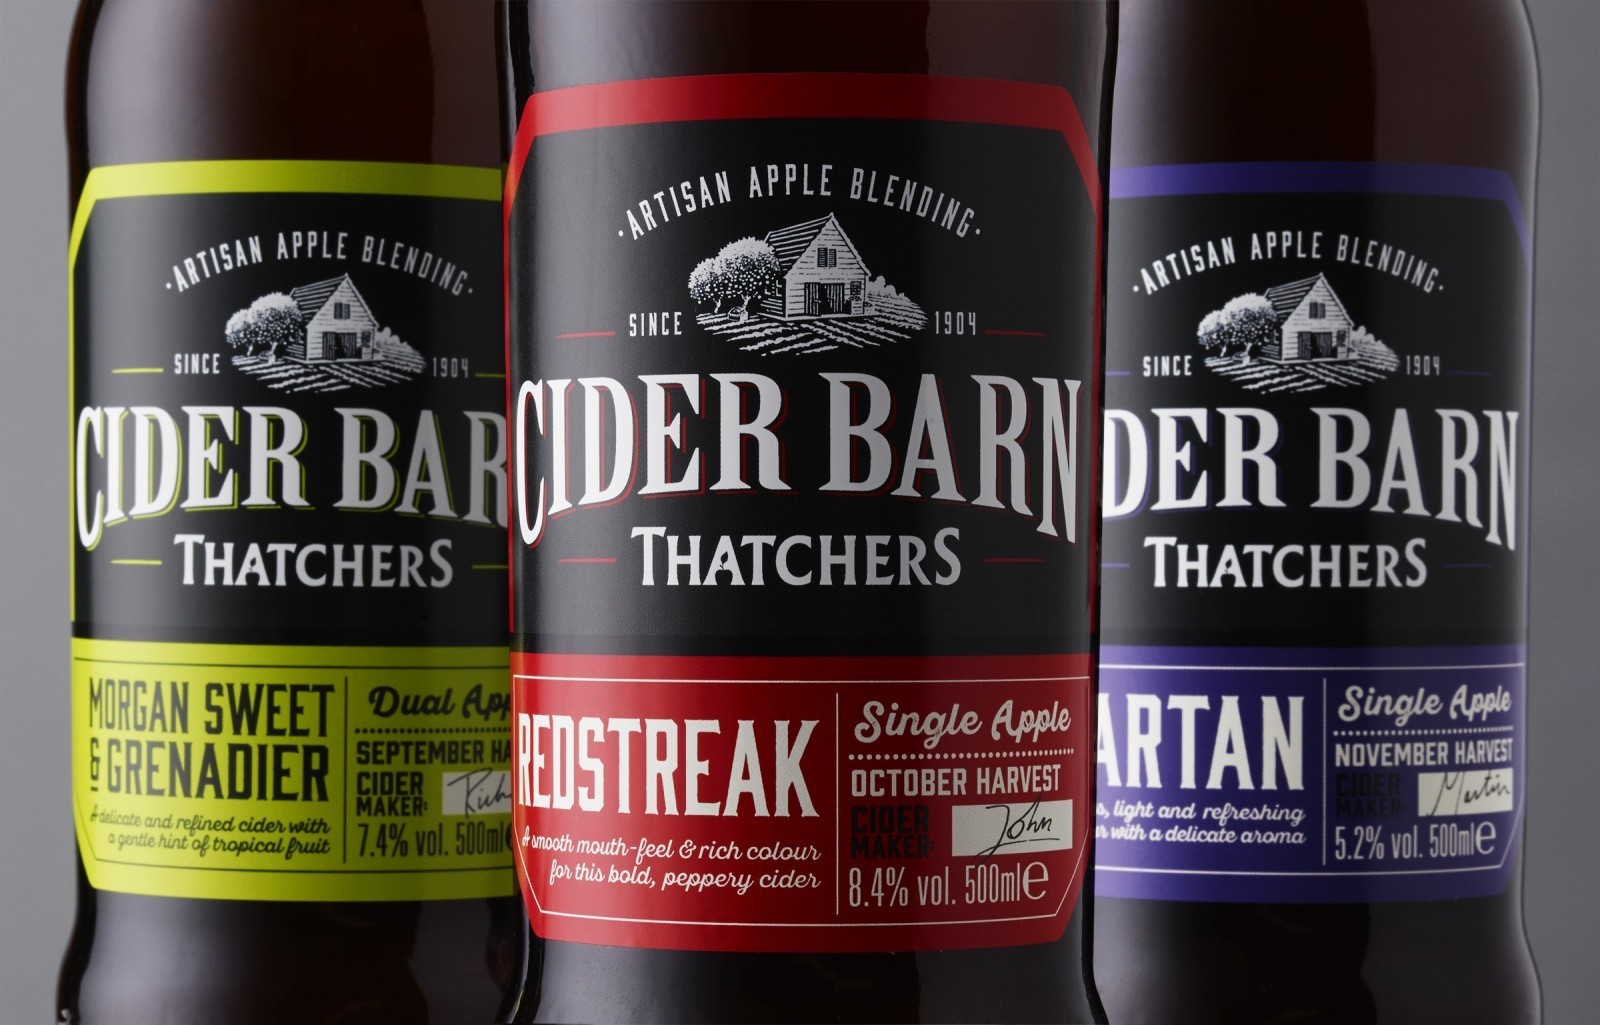 Cookchick – Thatchers Cider Barn